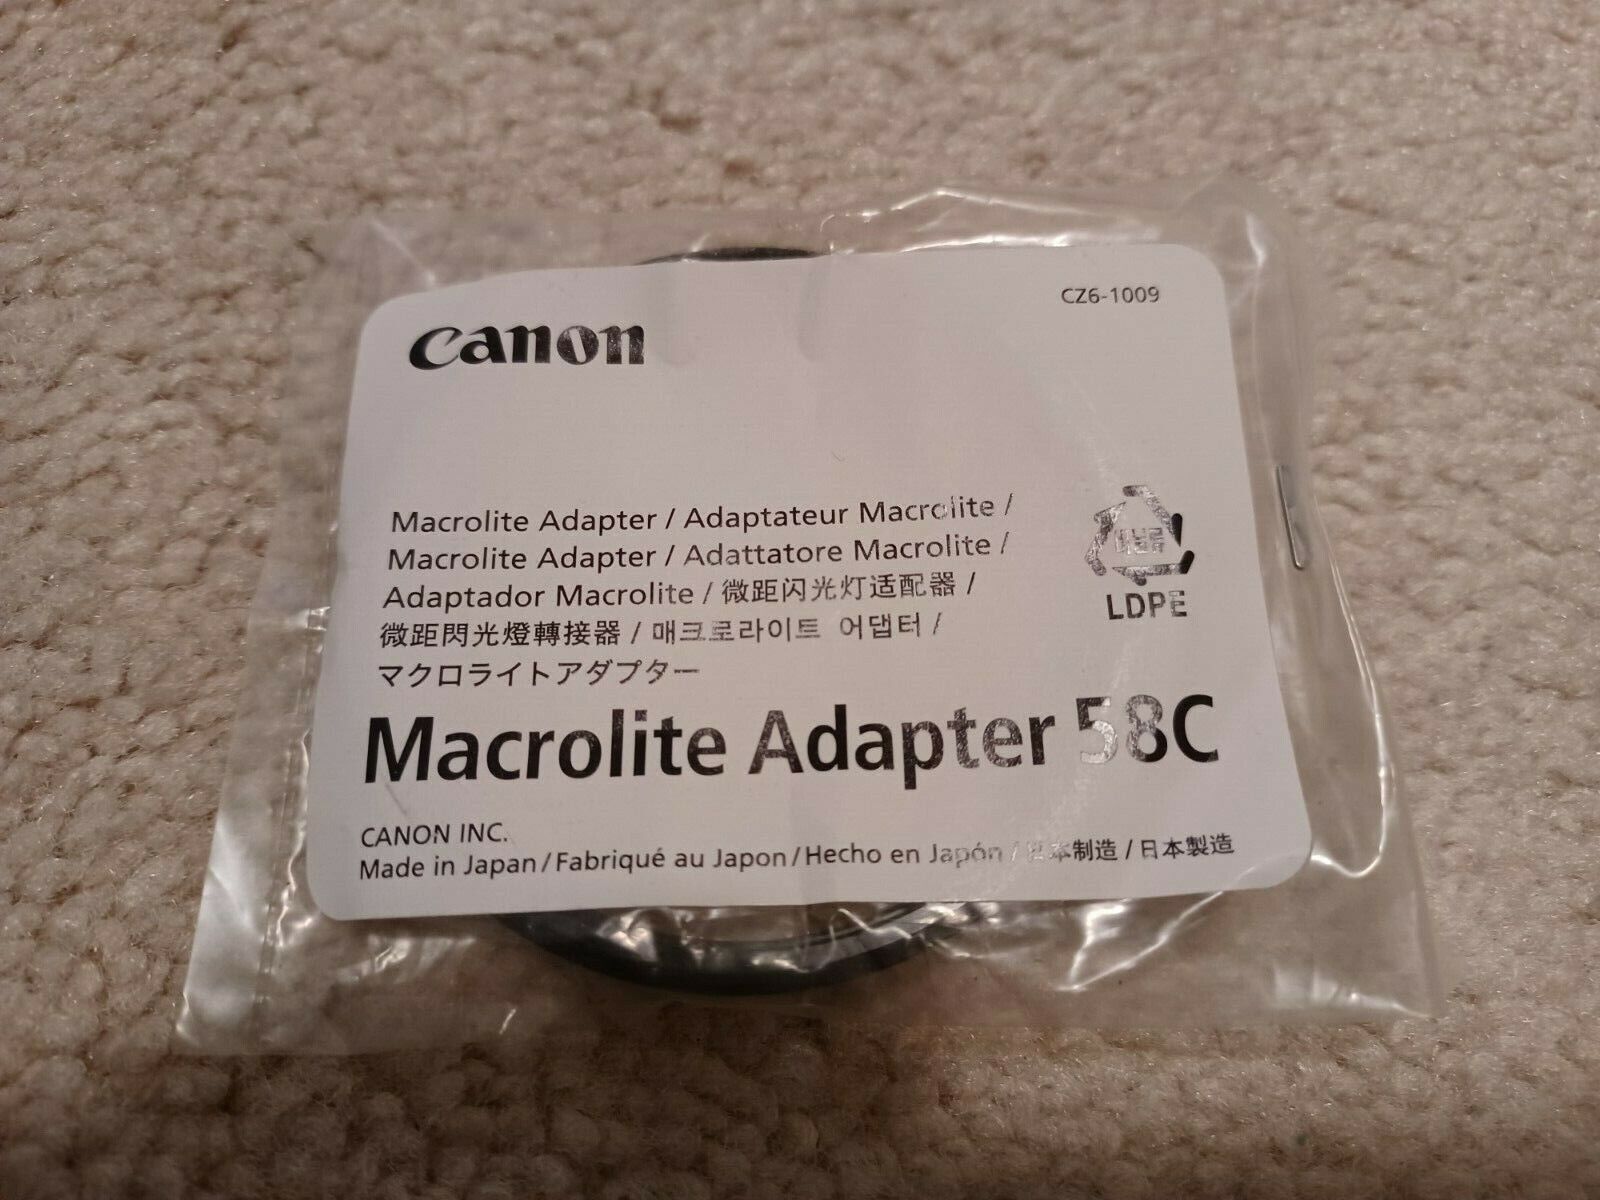 Lot of 10 Canon Macrolite Adapter 58C Canon